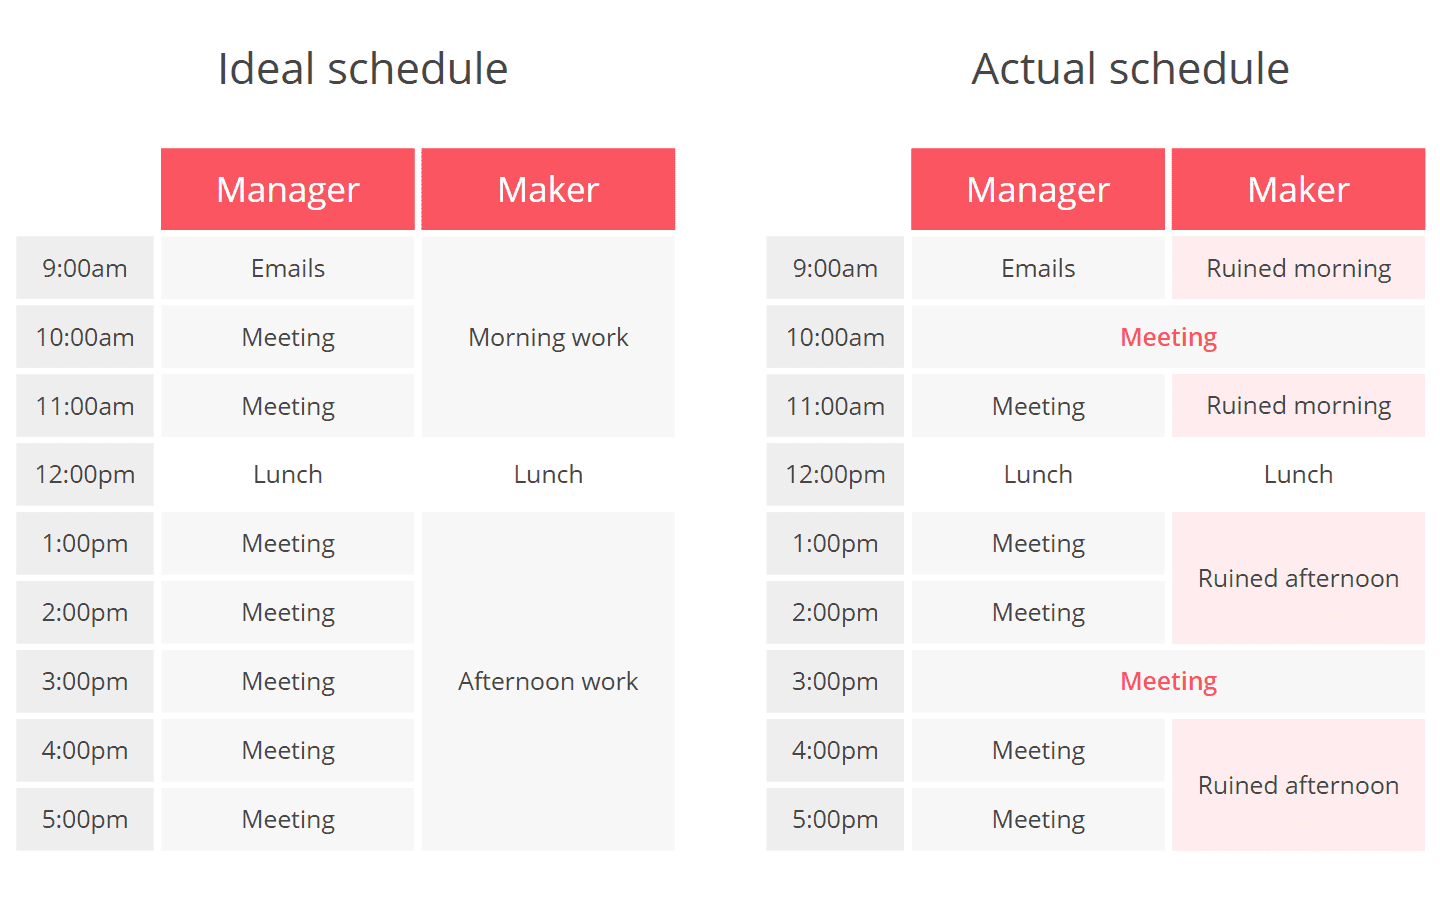 Maker's Schedule, Manager's Schedule 